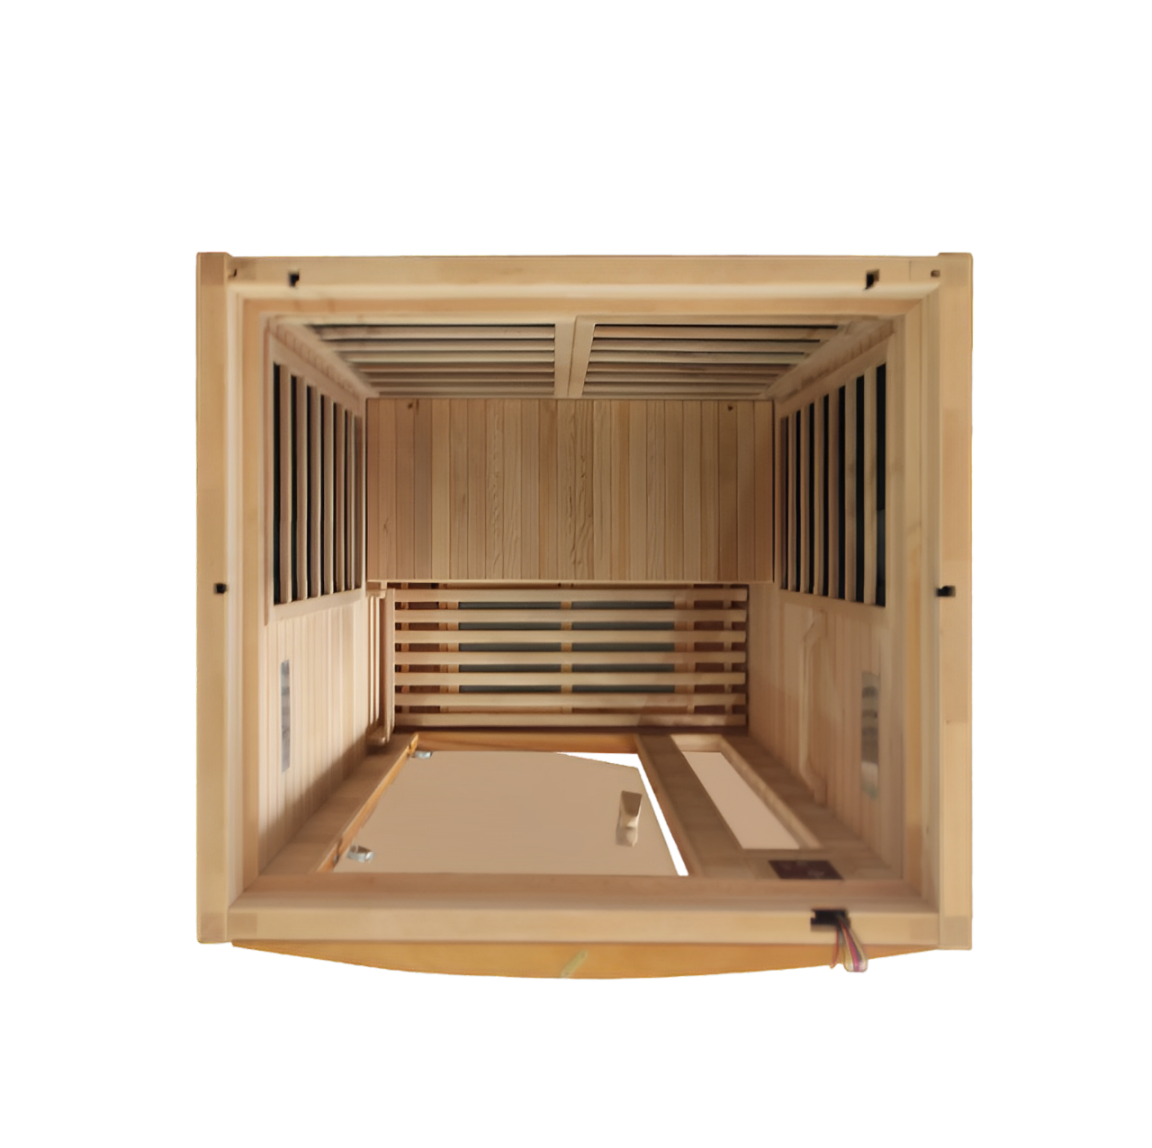 Gracia - 1-2 Person Low EMF FAR Infrared Sauna Feature Image White Background